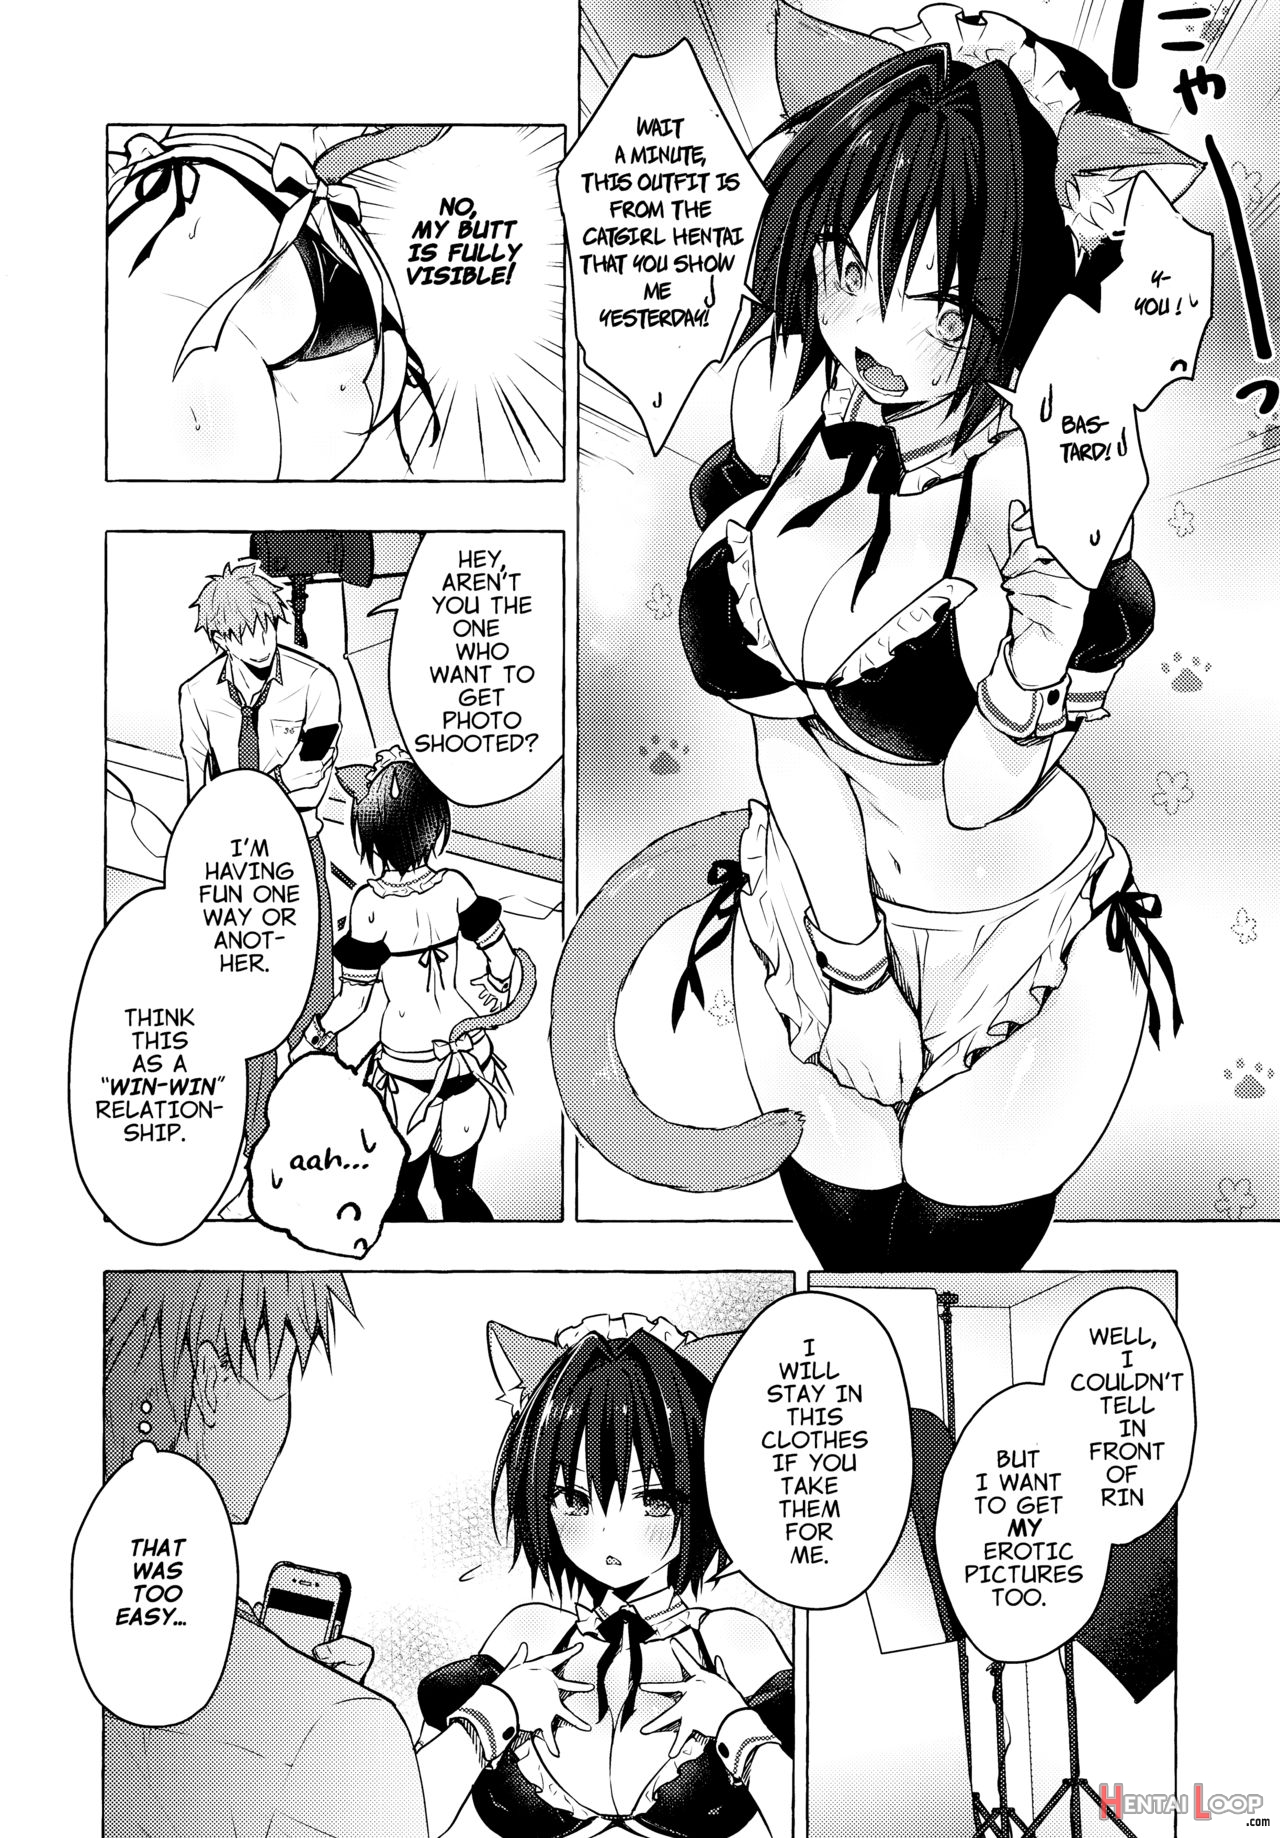 Akira-kun's Sex Life 4 page 9